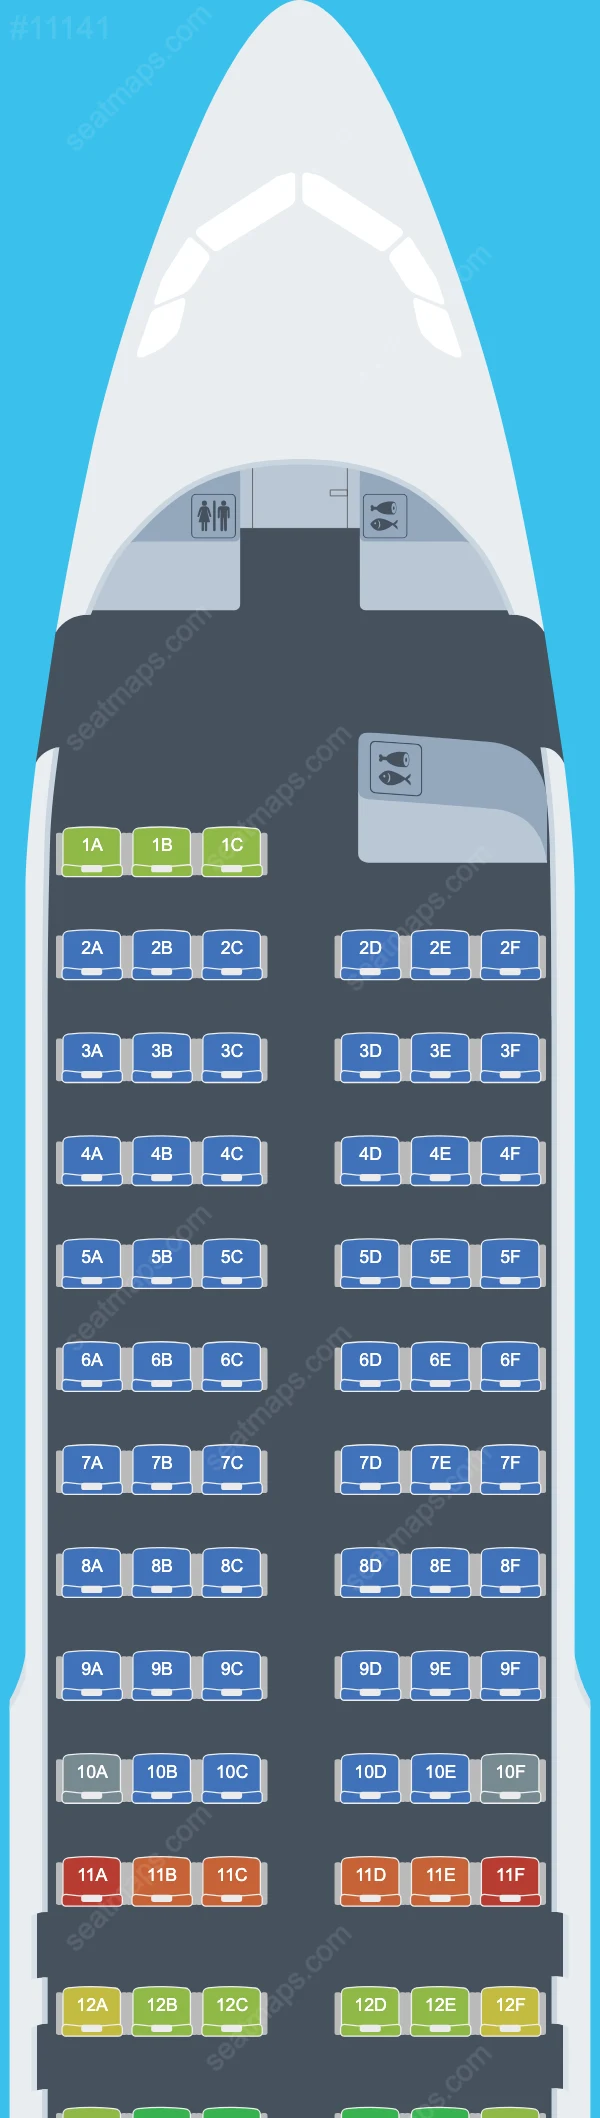 BA Euroflyer Airbus A320-200 seatmap mobile preview